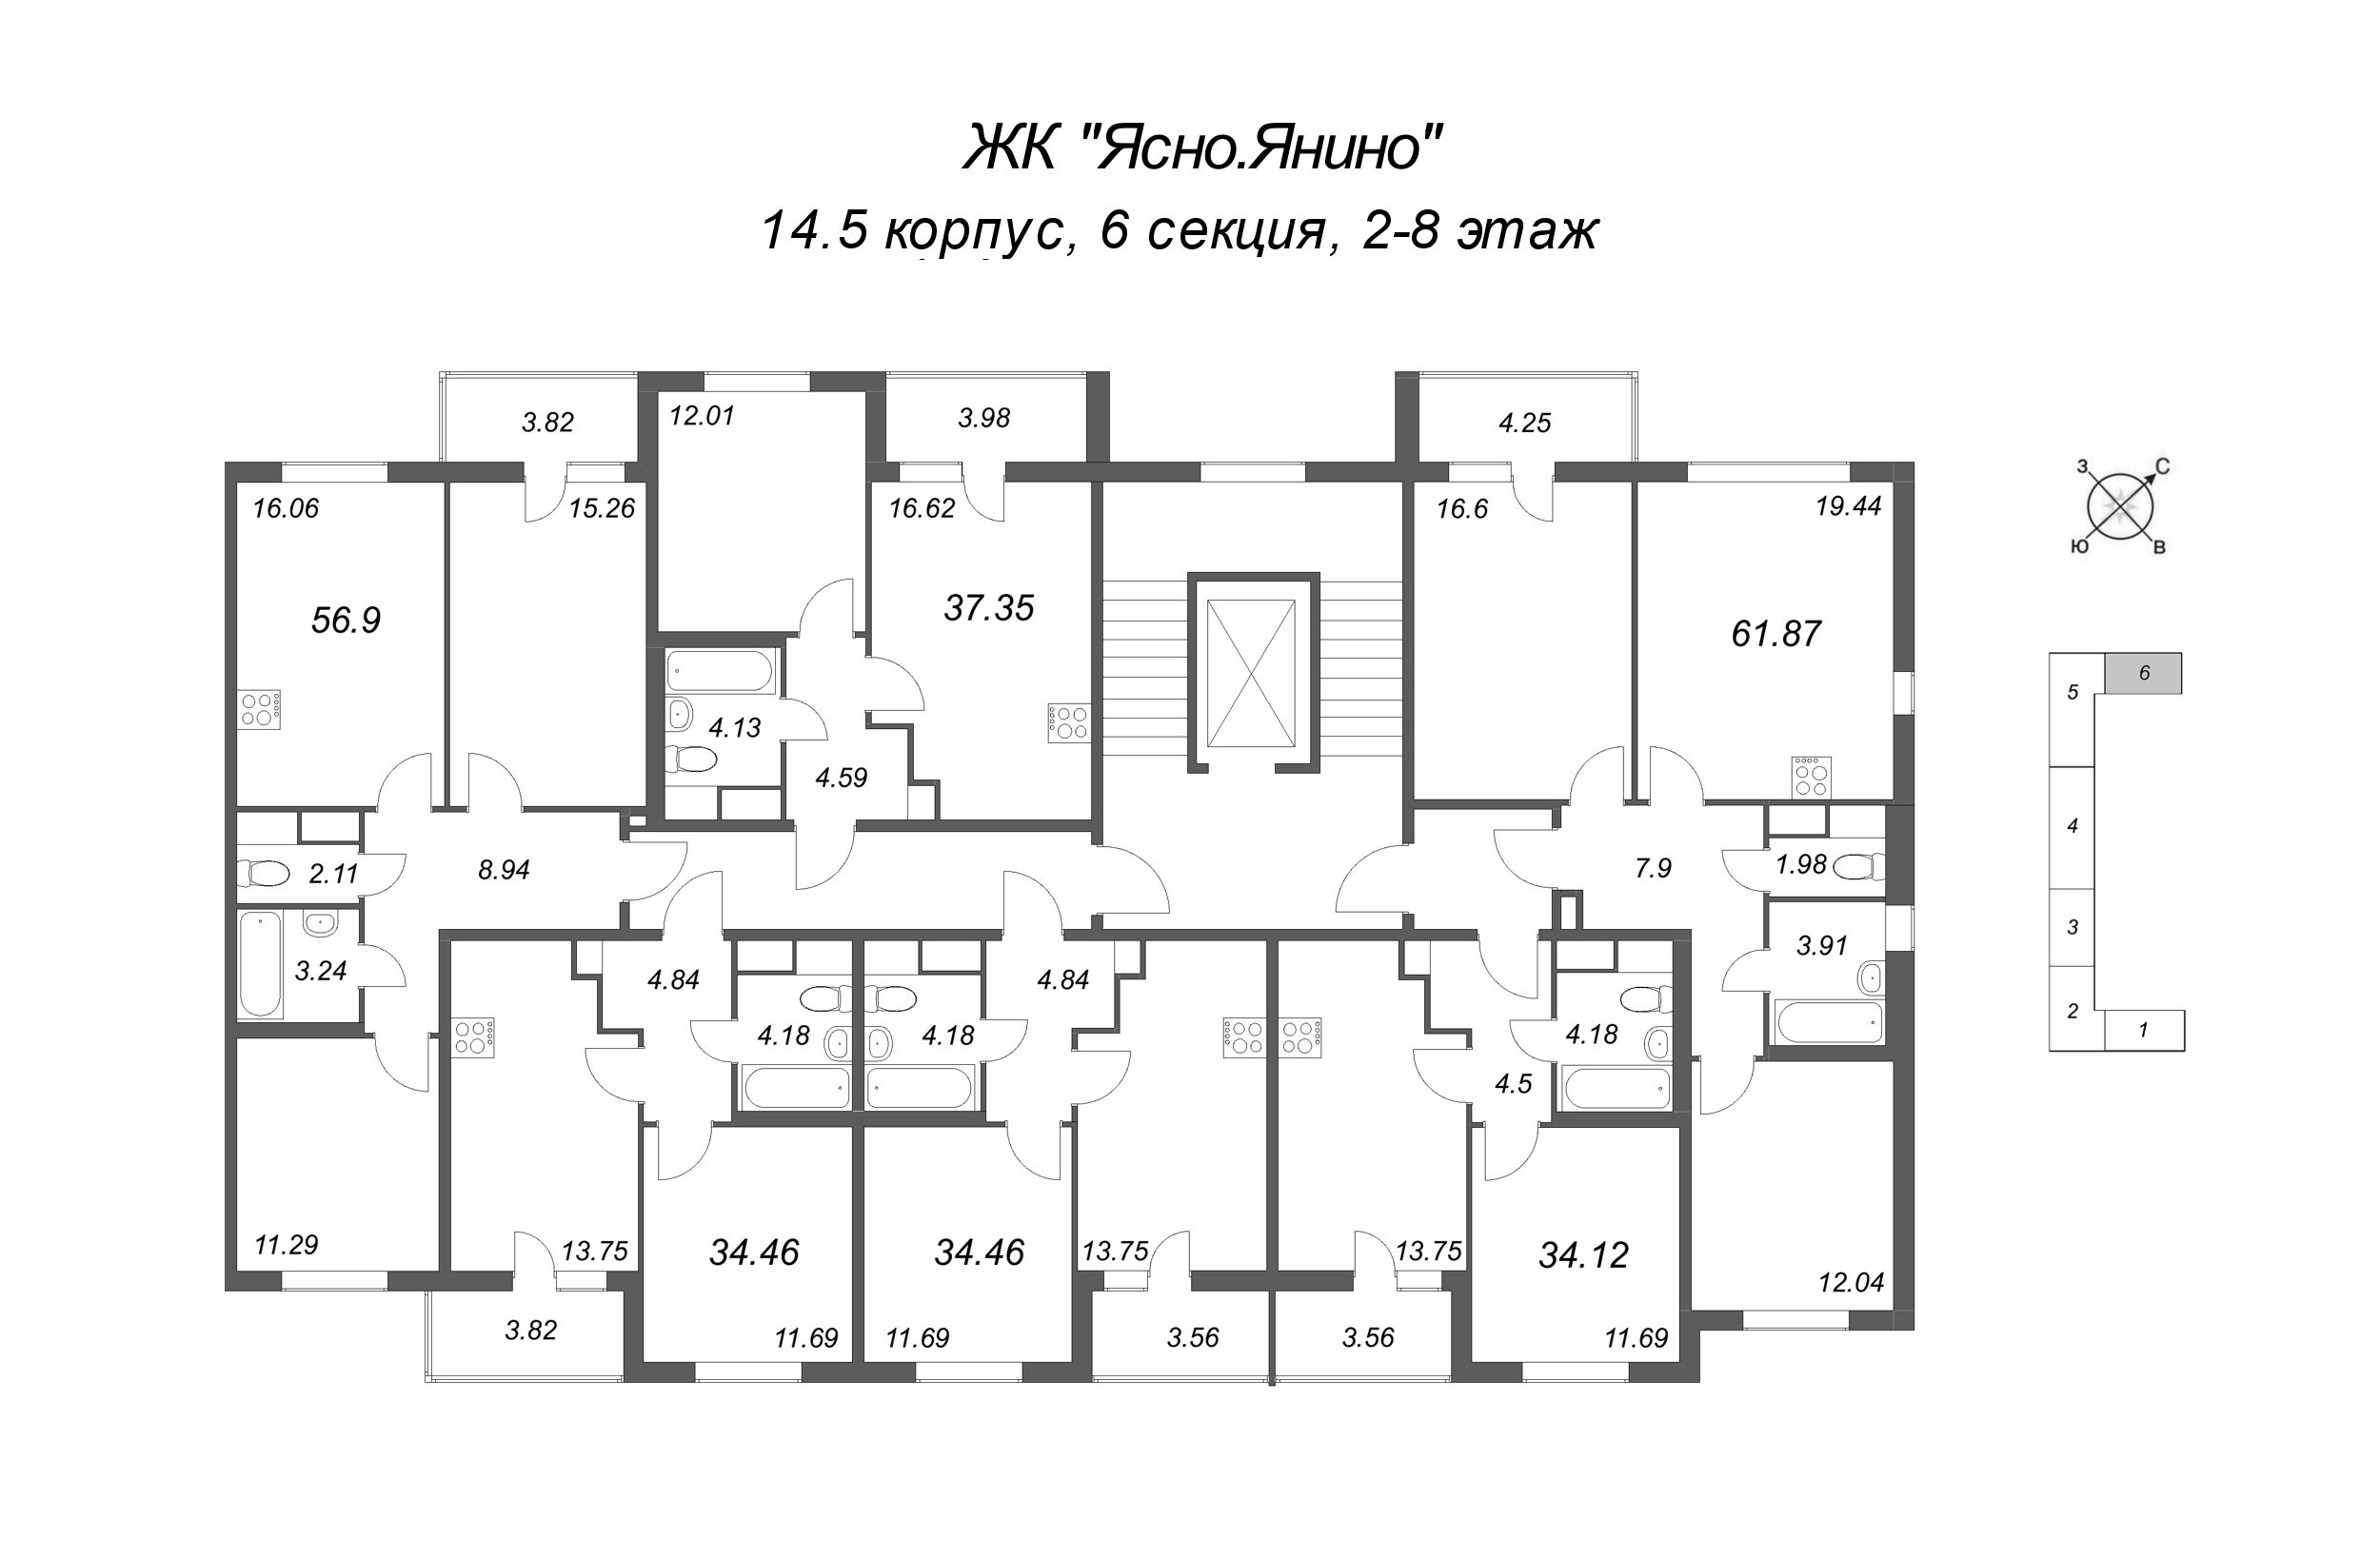 1-комнатная квартира, 34.46 м² в ЖК "Ясно.Янино" - планировка этажа